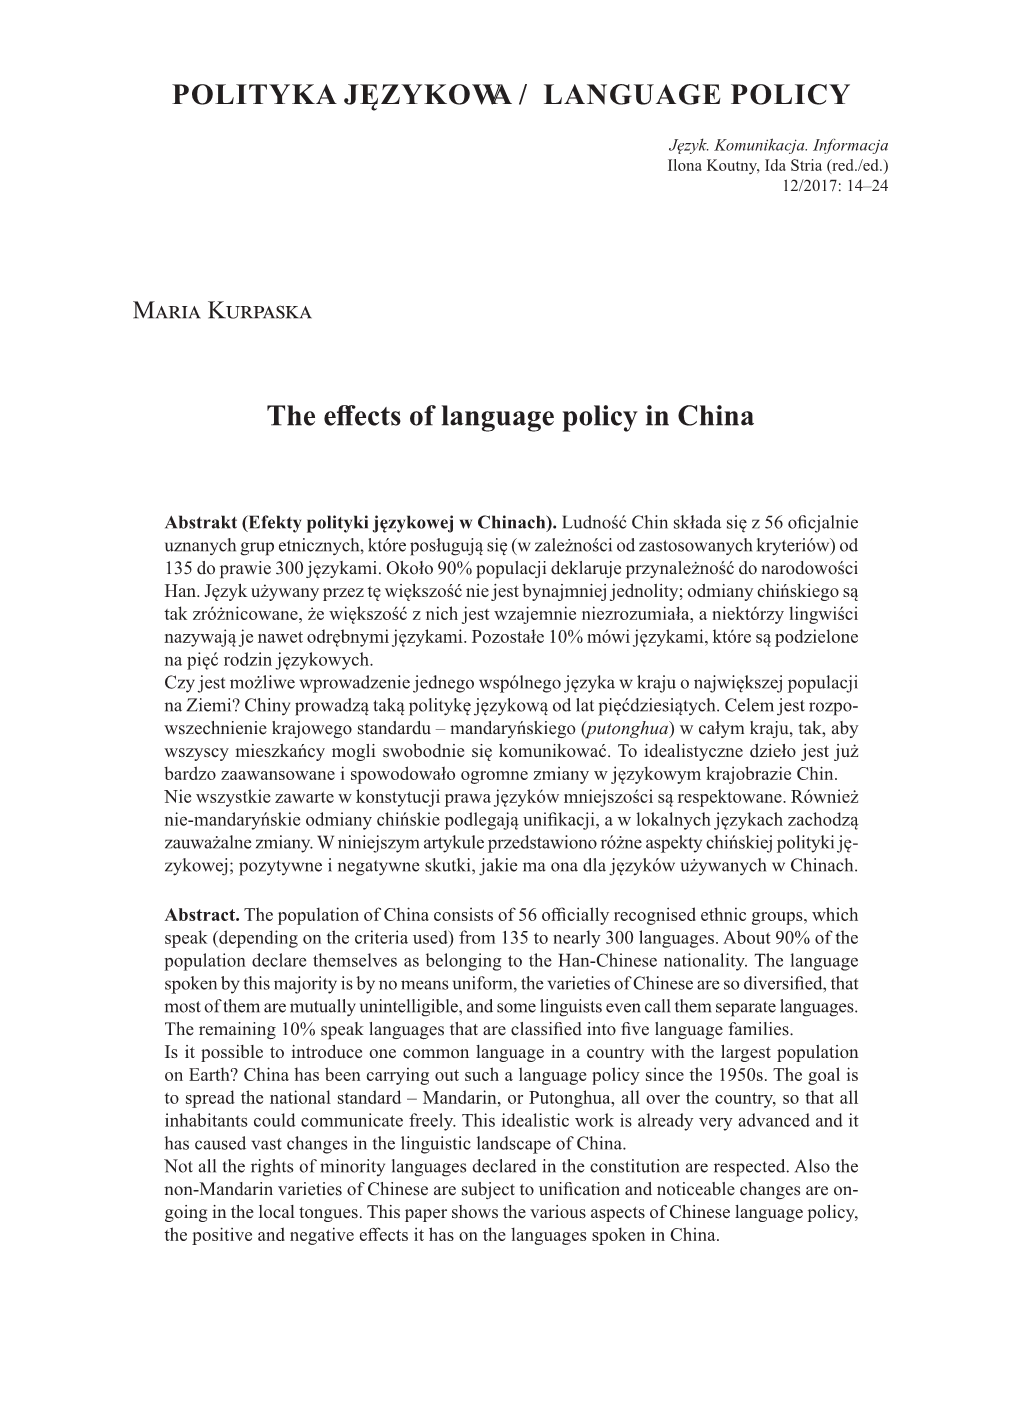 Polityka Językowa / Language Policy the Effects of Language Policy in China